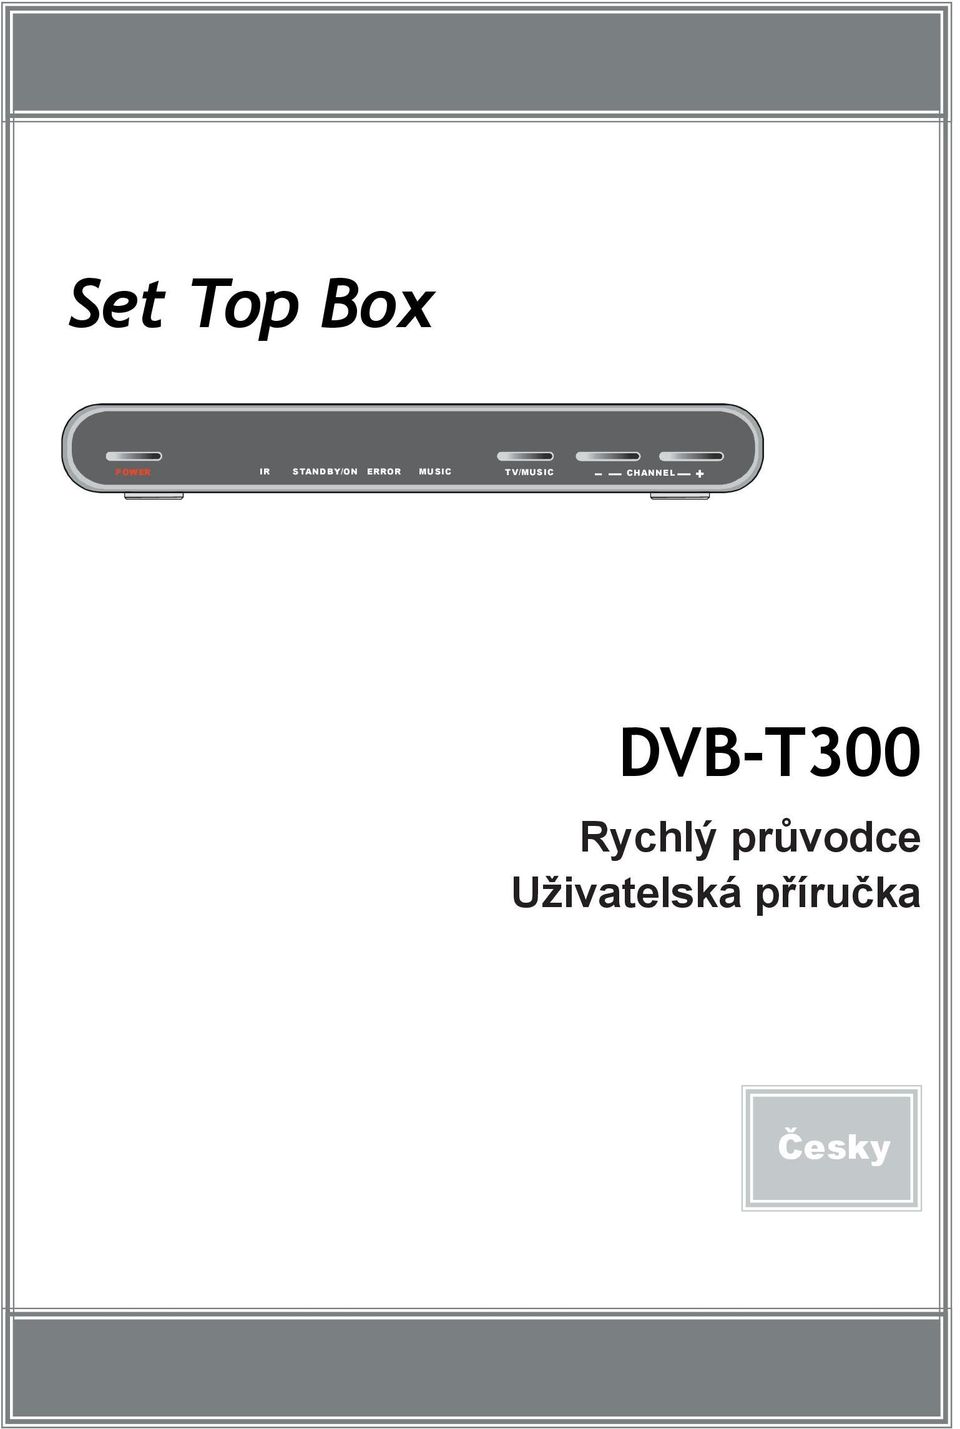 TV/MUSIC CHANNEL + DVB-T300